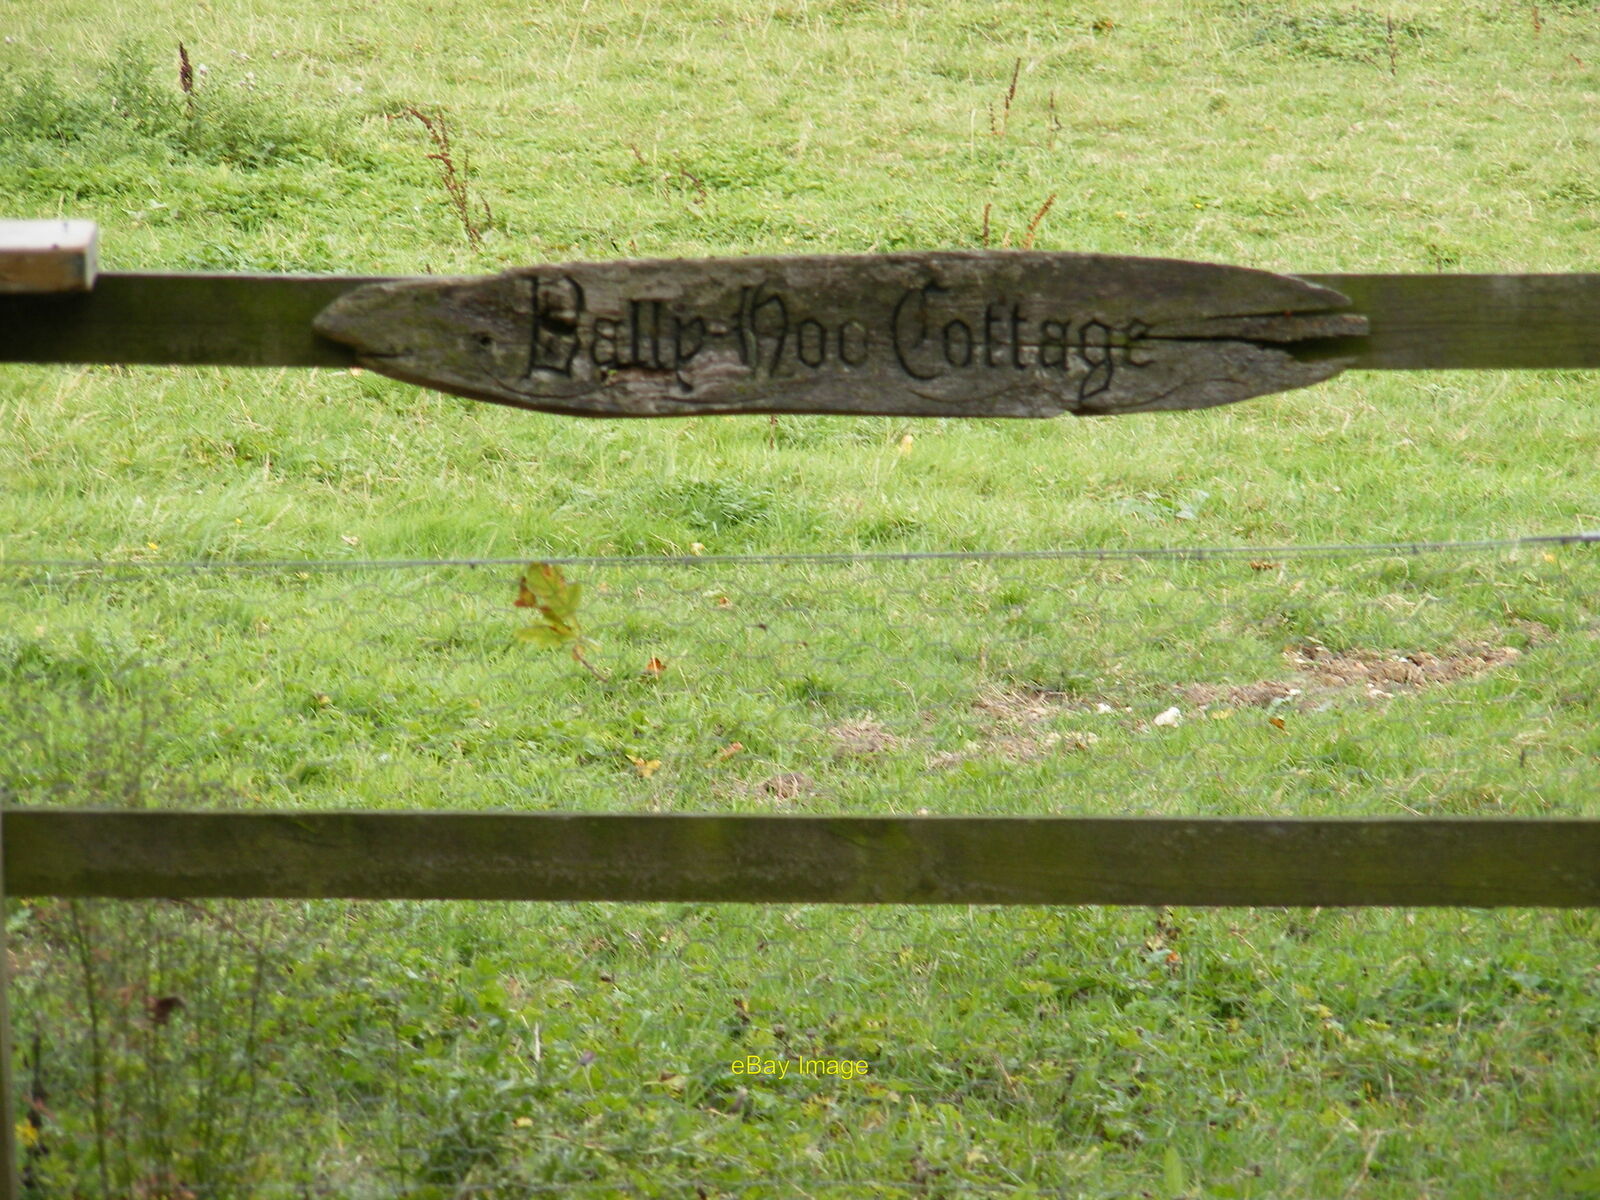 Photo 12x8 Bally Hoo Cottage sign Otley Suffolk :: TM2256 c2011